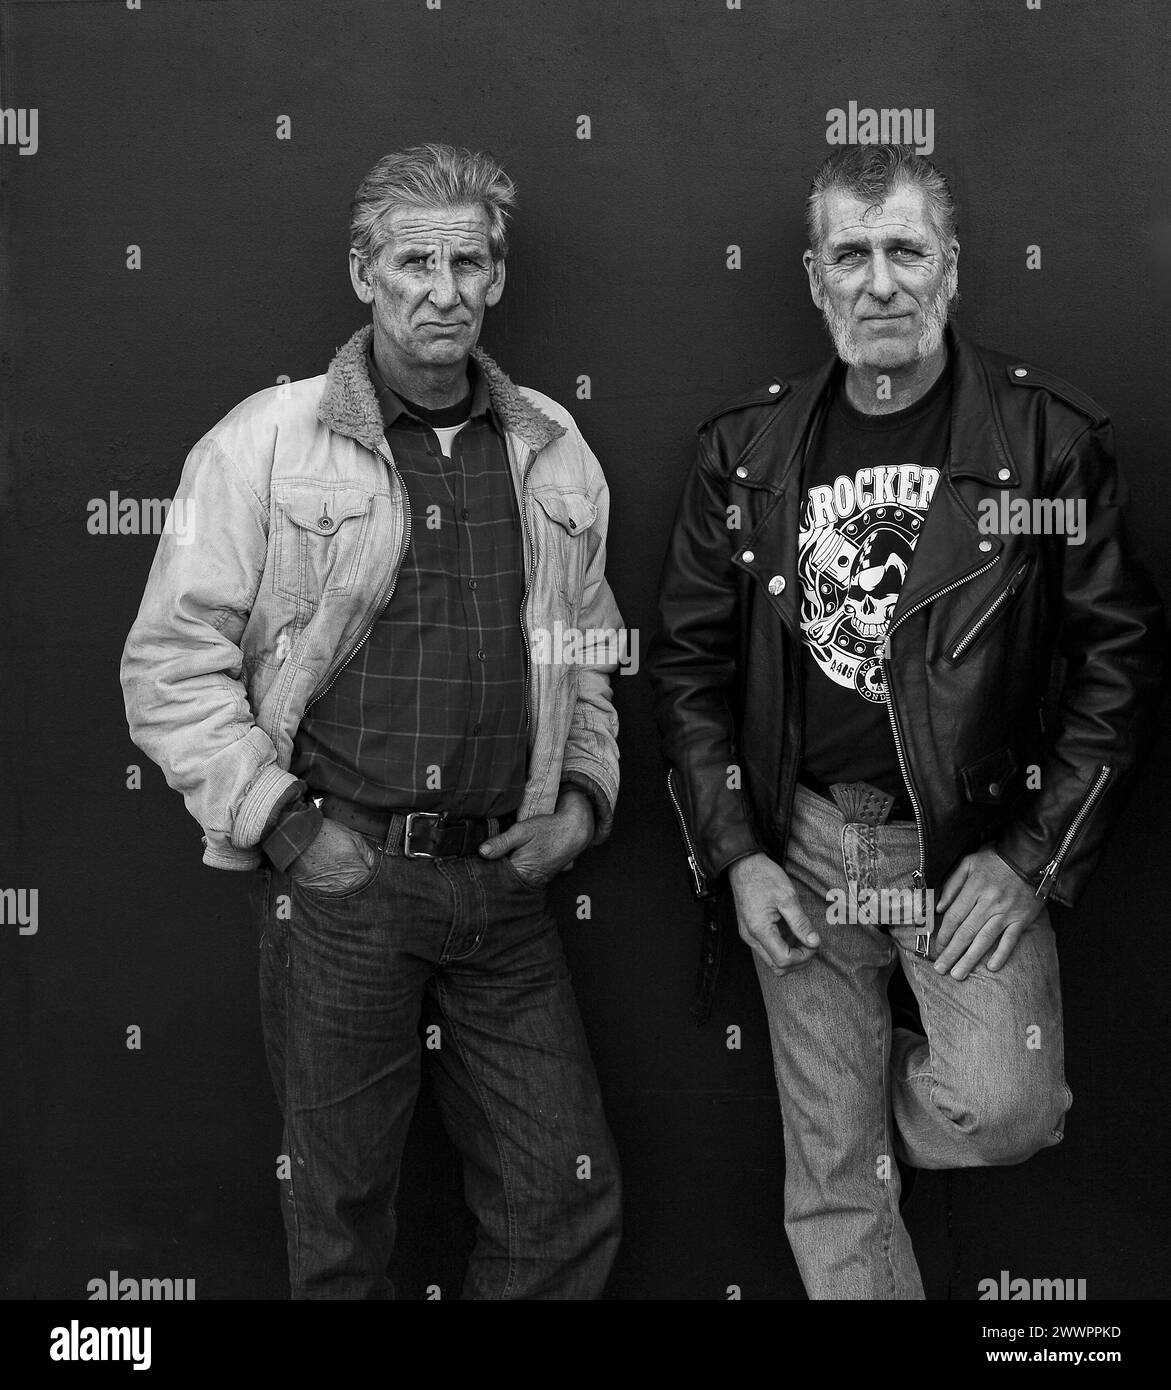 Ton-up-Tag im Ace Cafe in London mit zwei coolen Old School Rocker-Posen. Stockfoto